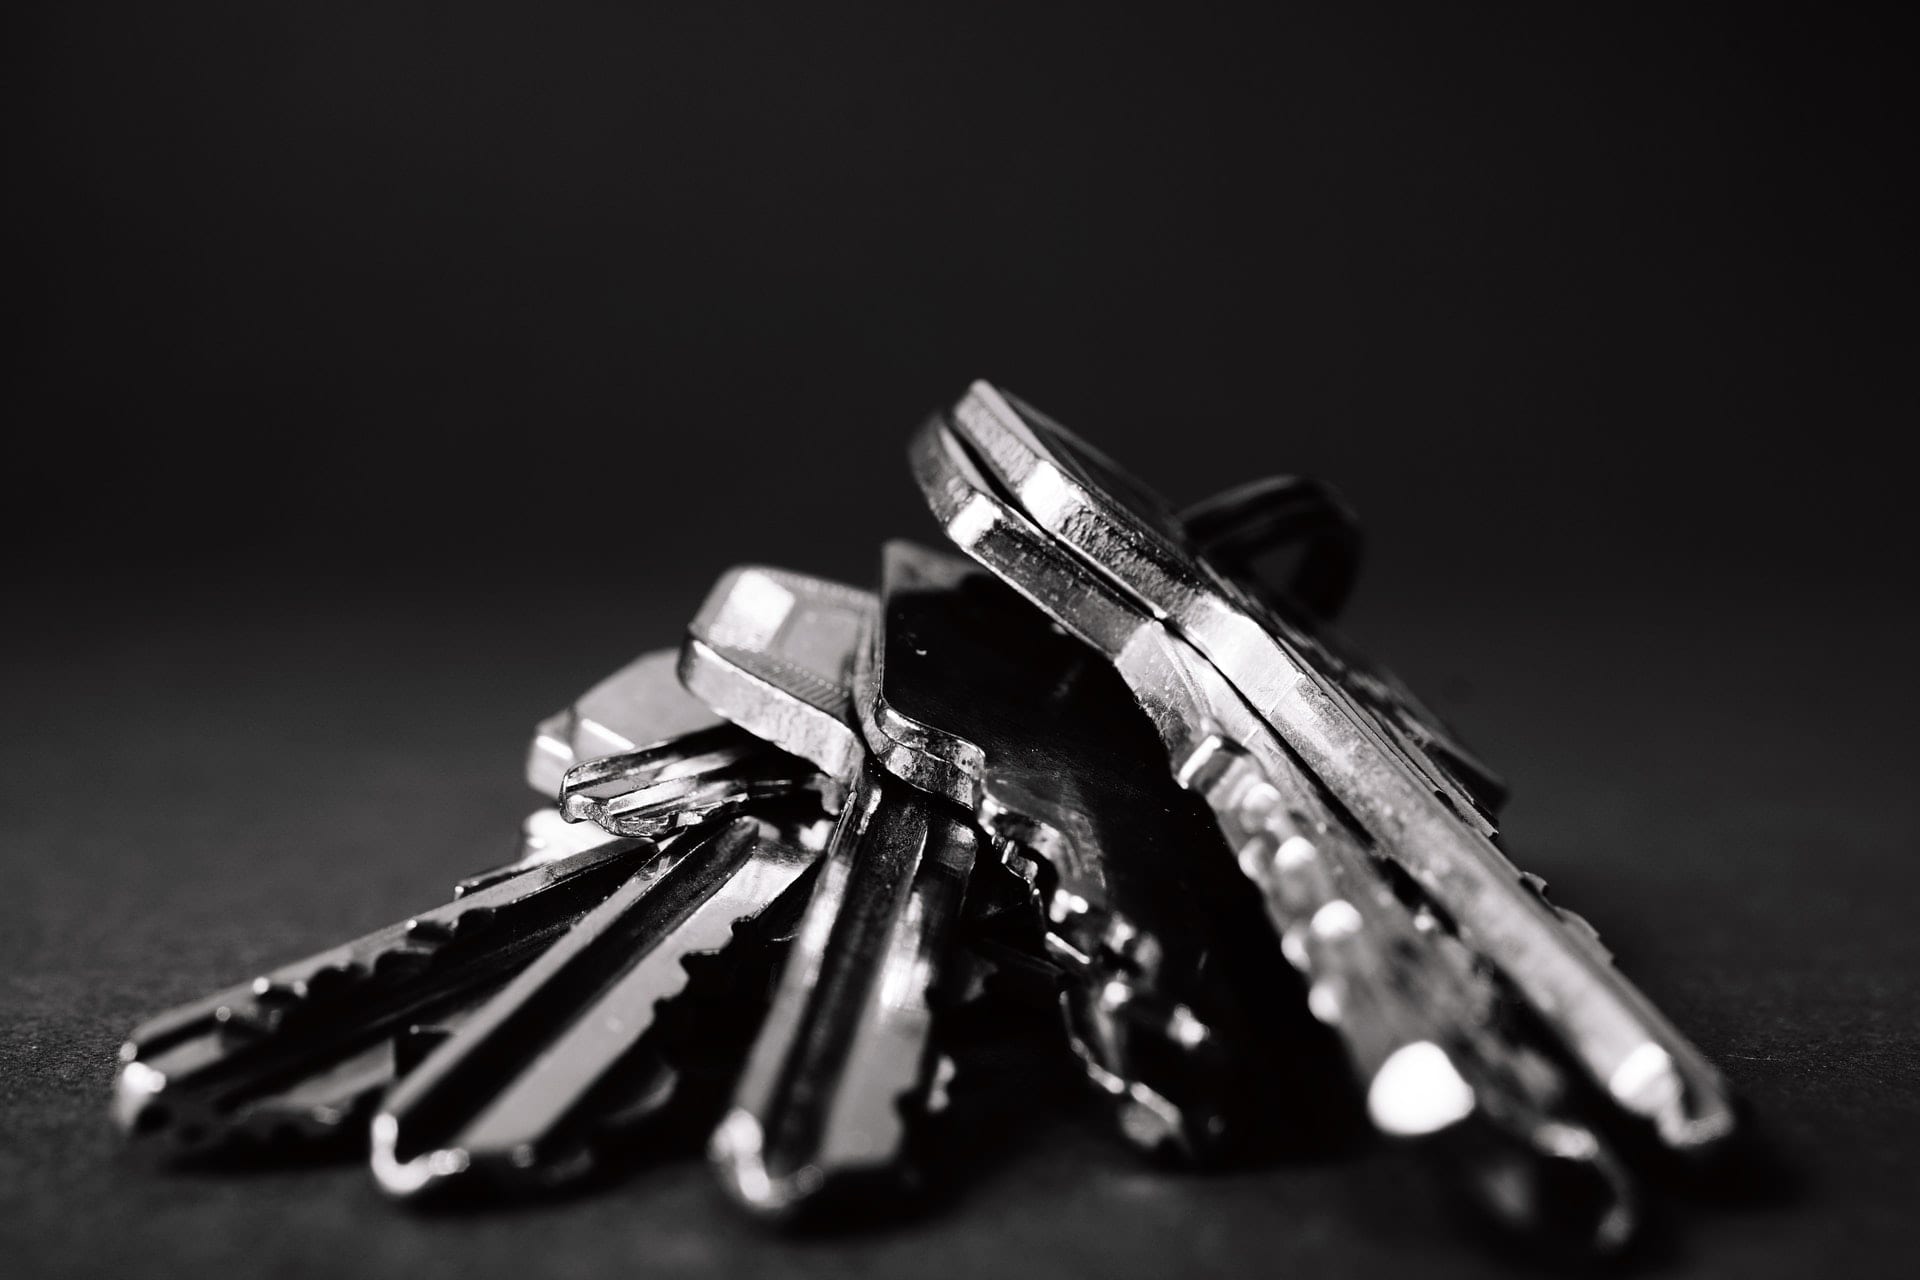 Key Cut and Car Keys Made Clarksville, TN - The LockSmith Co.